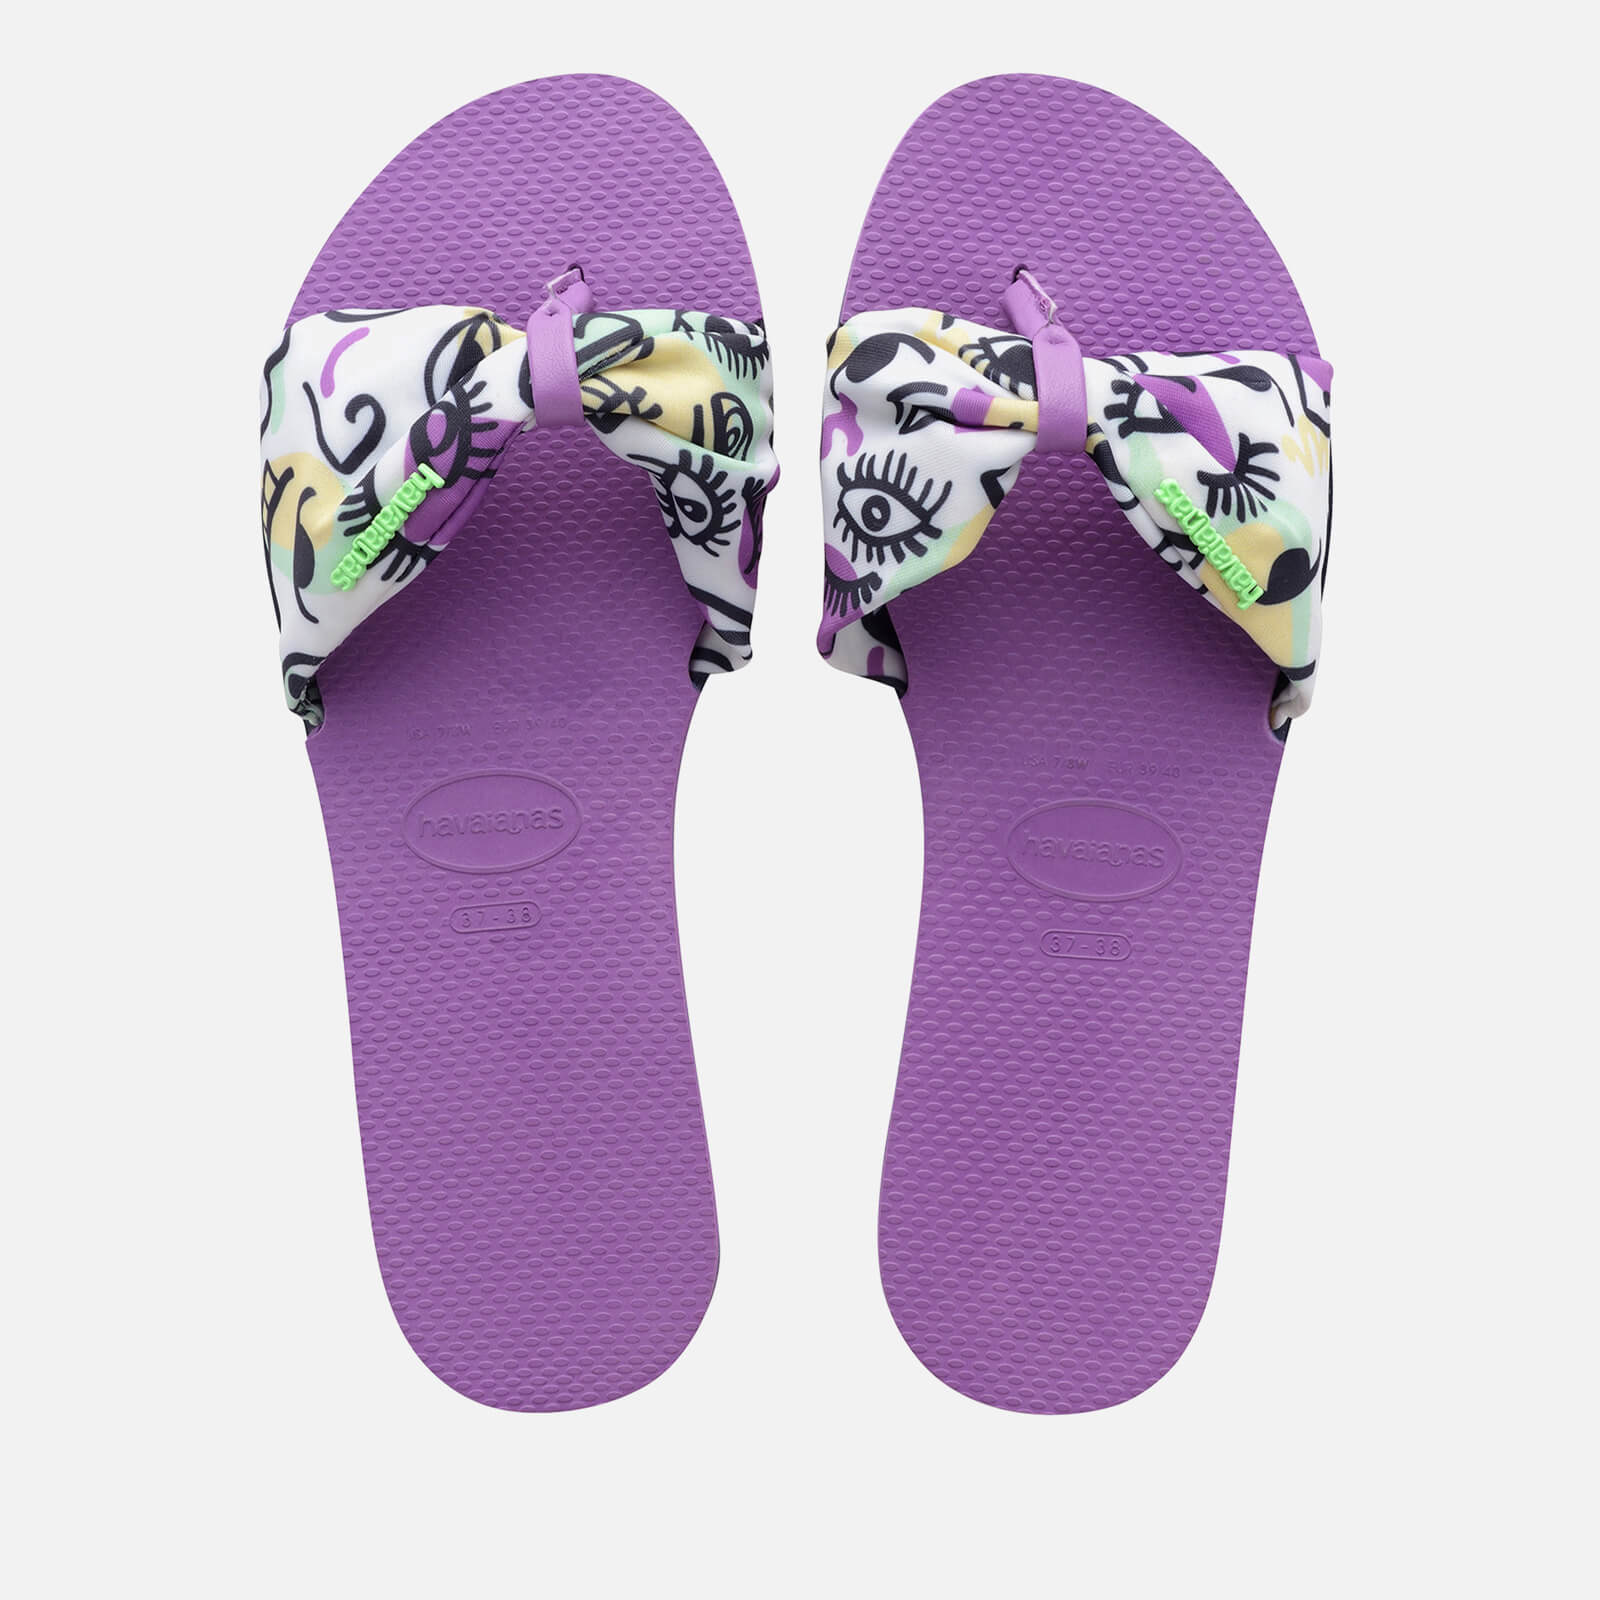 havaianas womens saint tropez sandals - purple - uk 3/4 violett